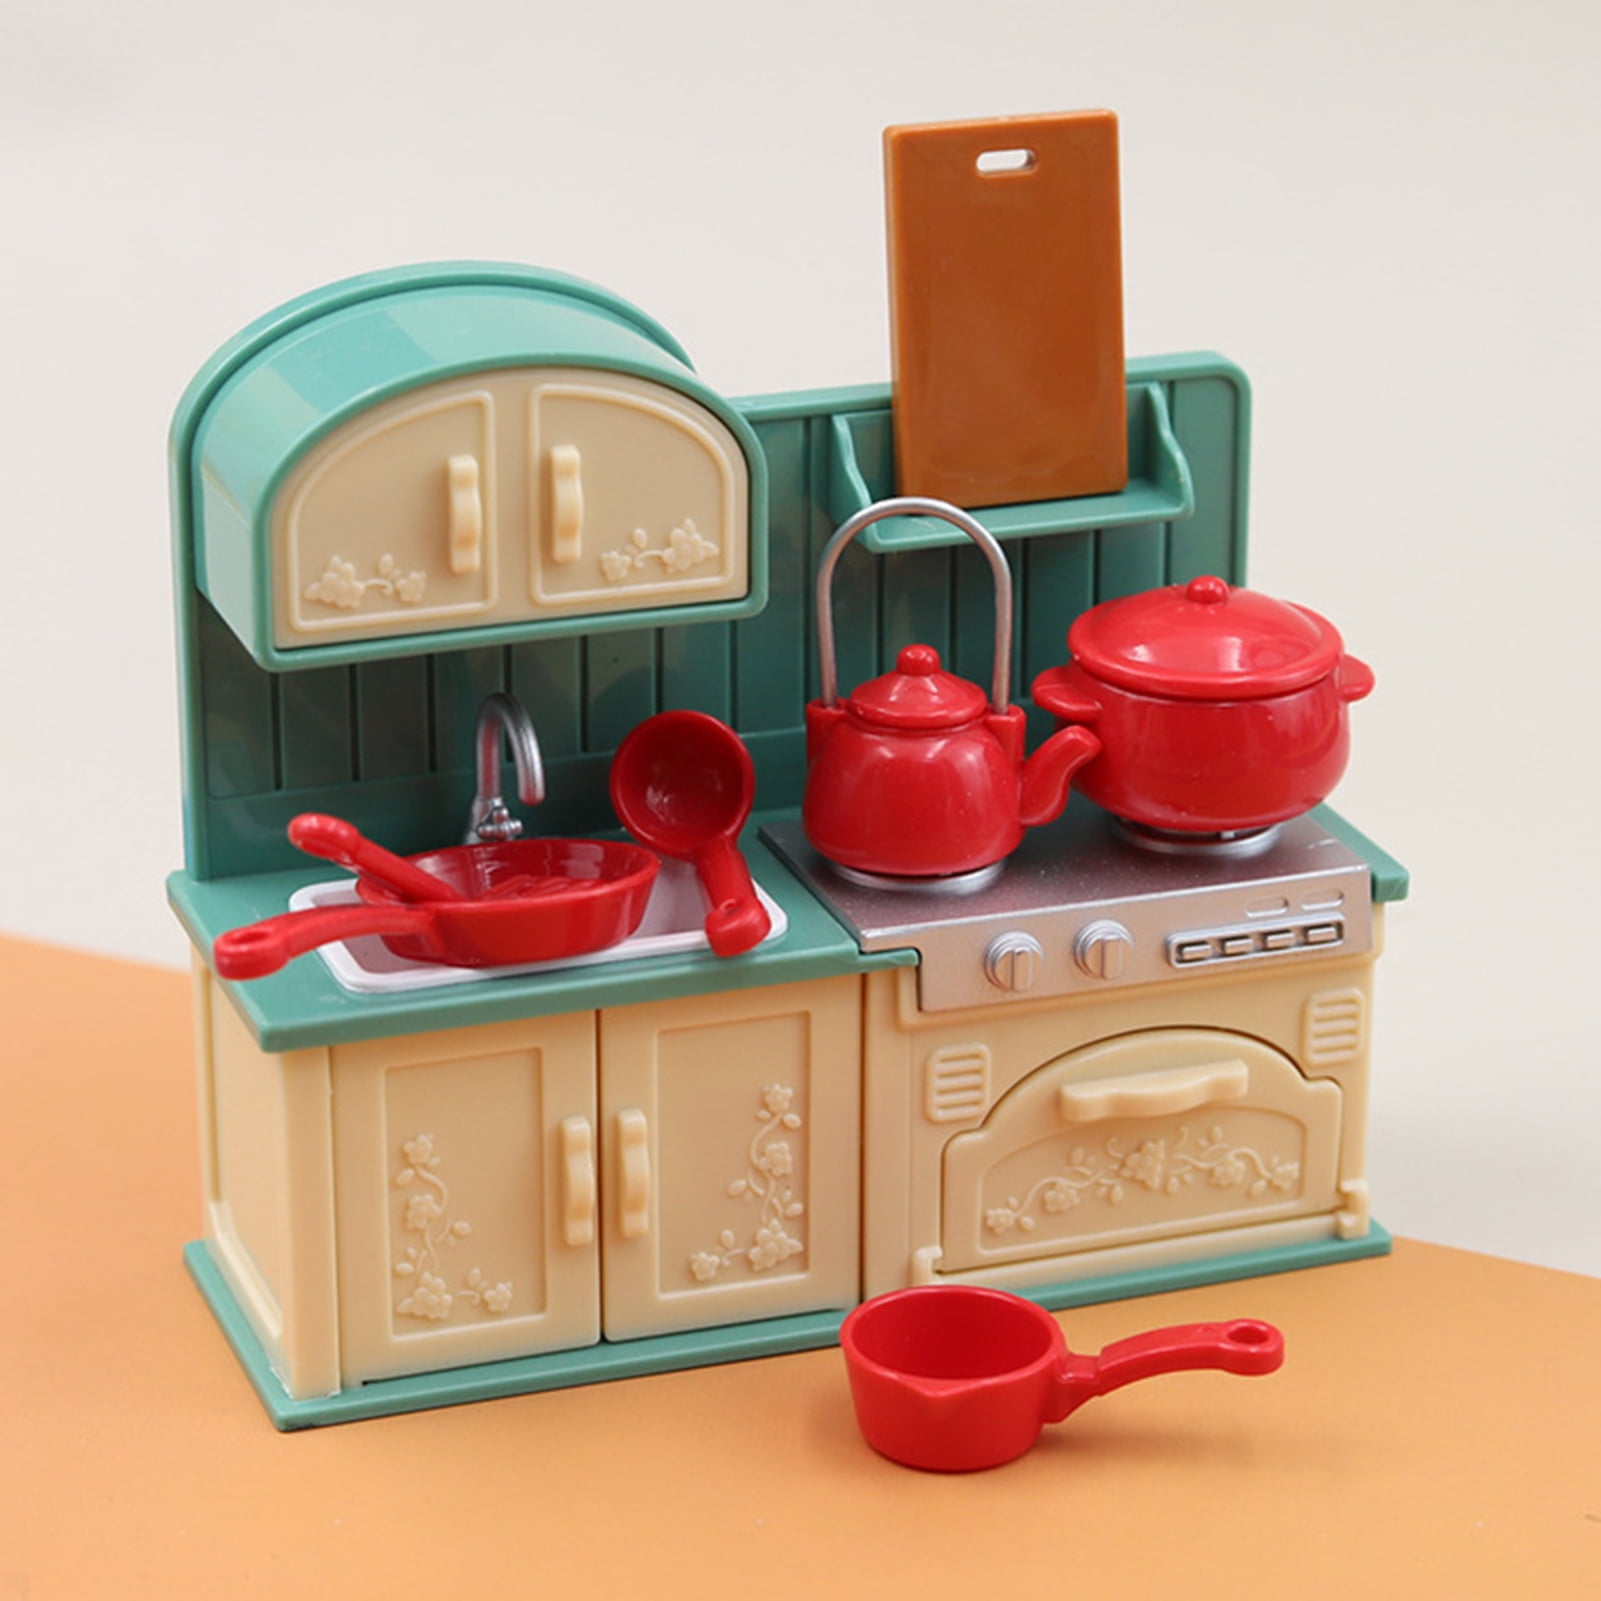 Miniature Real Cooking Kitchen Set installation